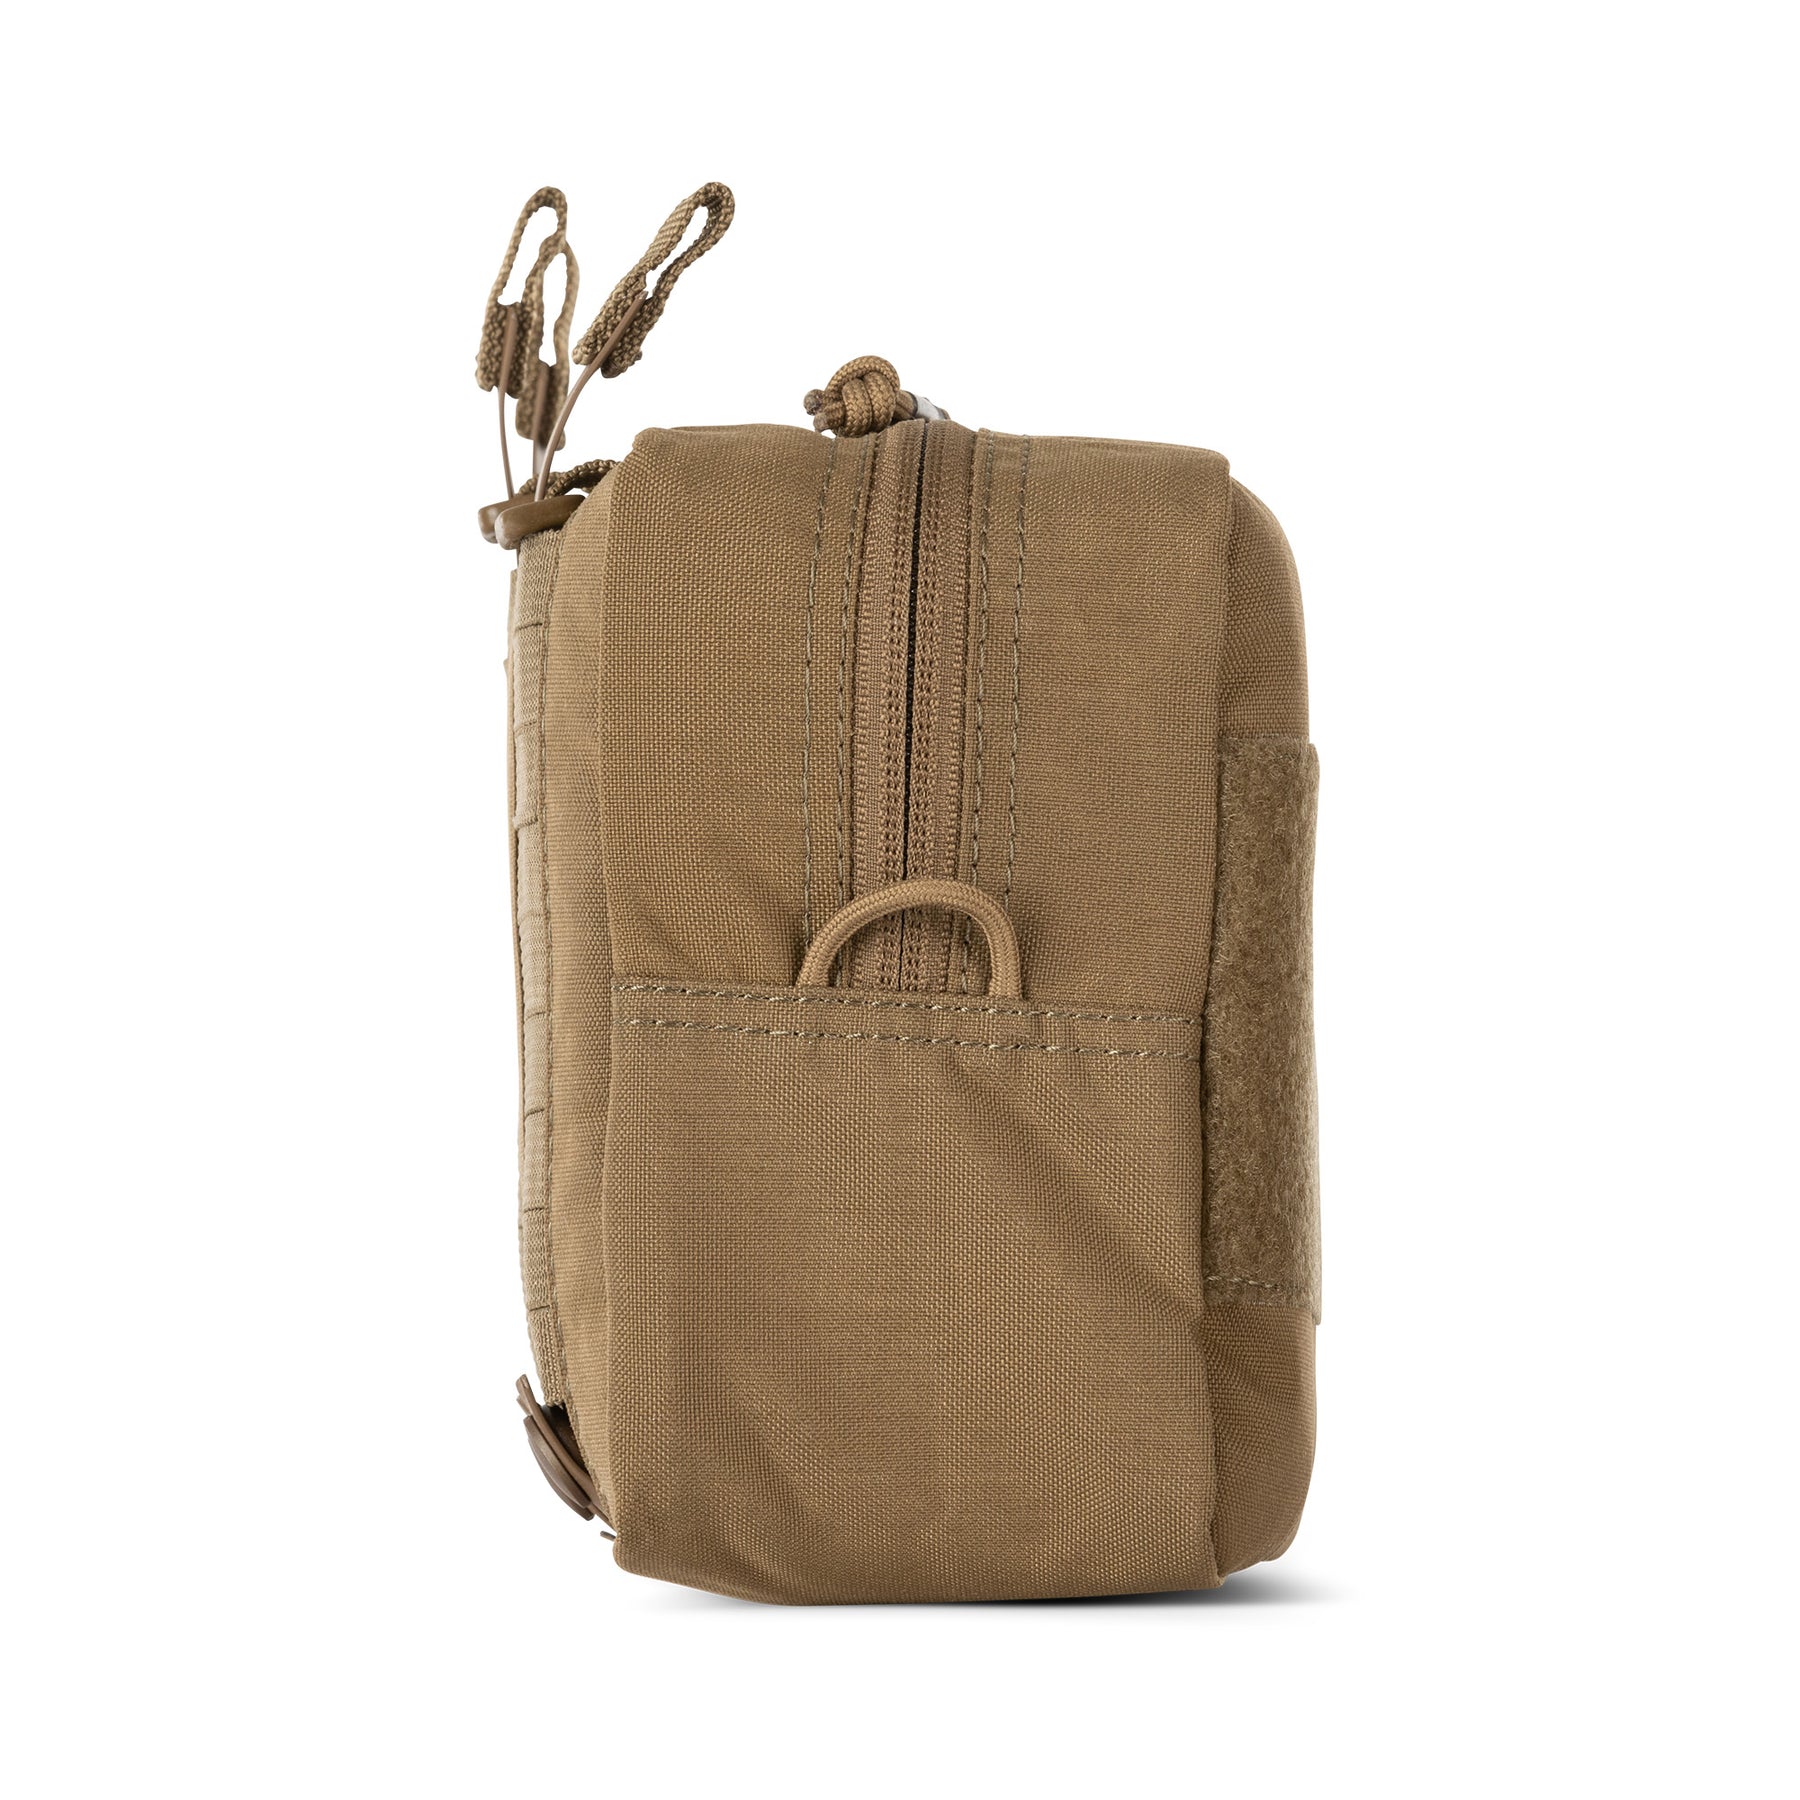 tasca MOLLE orizzontale 9x6 flex pouch di 5.11 sabbia (kangaroo) - vista laterale destra